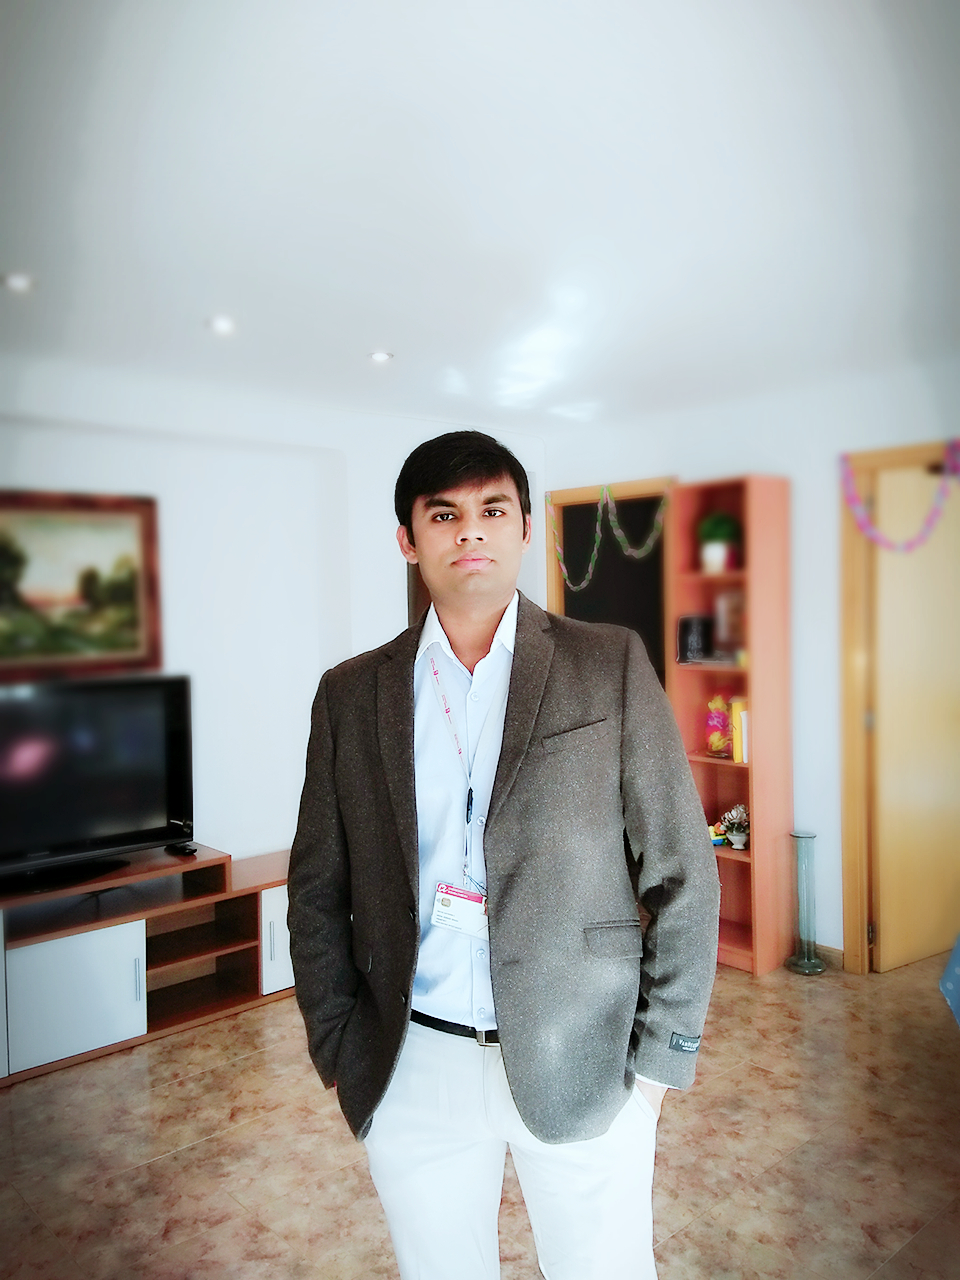 Dr. Vivek Singh